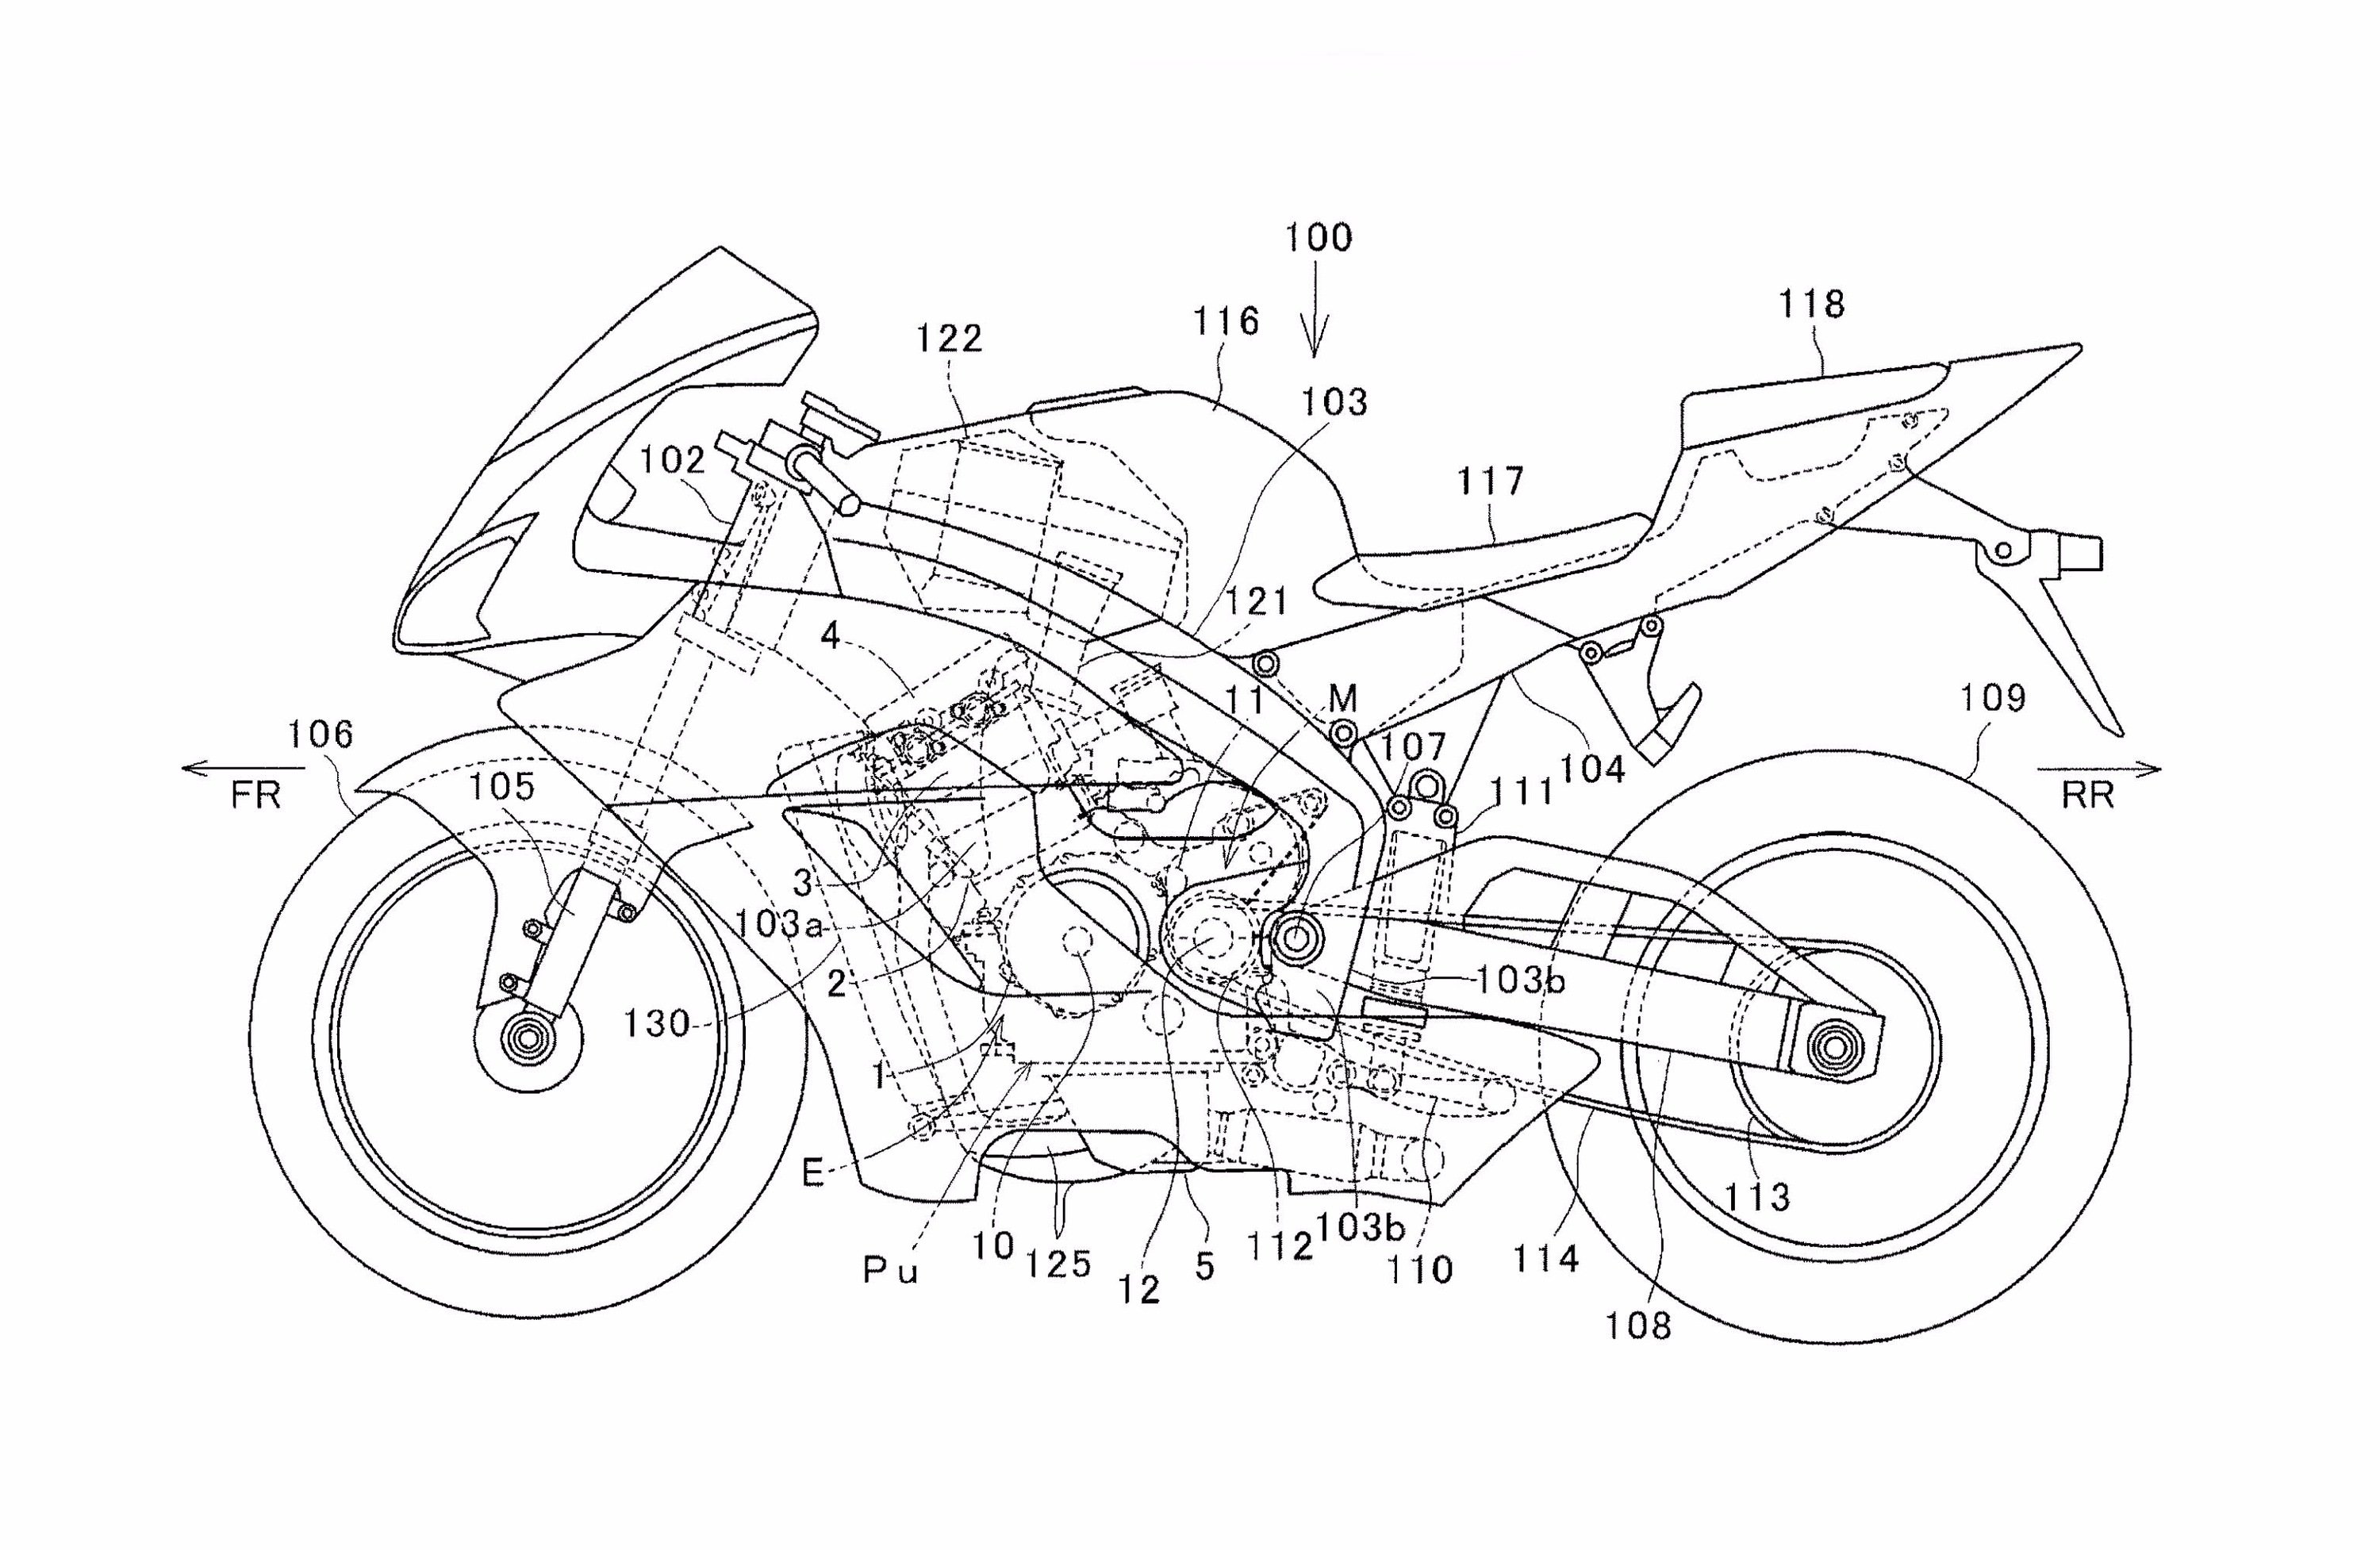 Honda, brevetto per fasatura variabile. In arrivo la nuova V4?